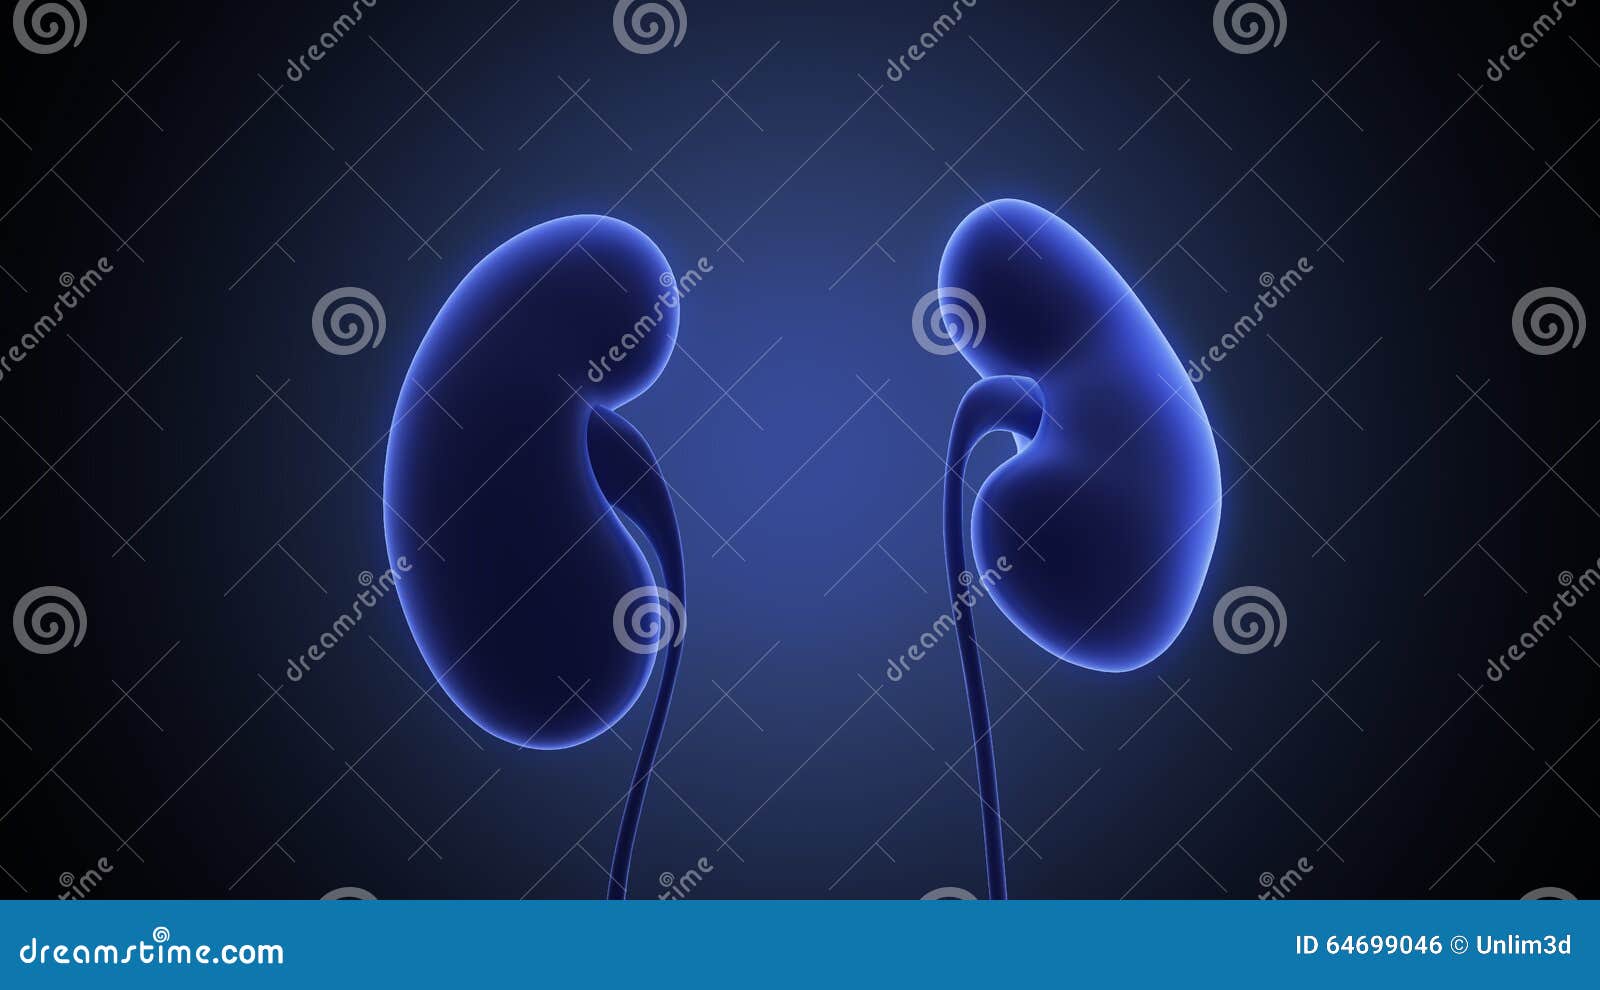 Human kidney organ stock illustration. Illustration of healthy - 64699046